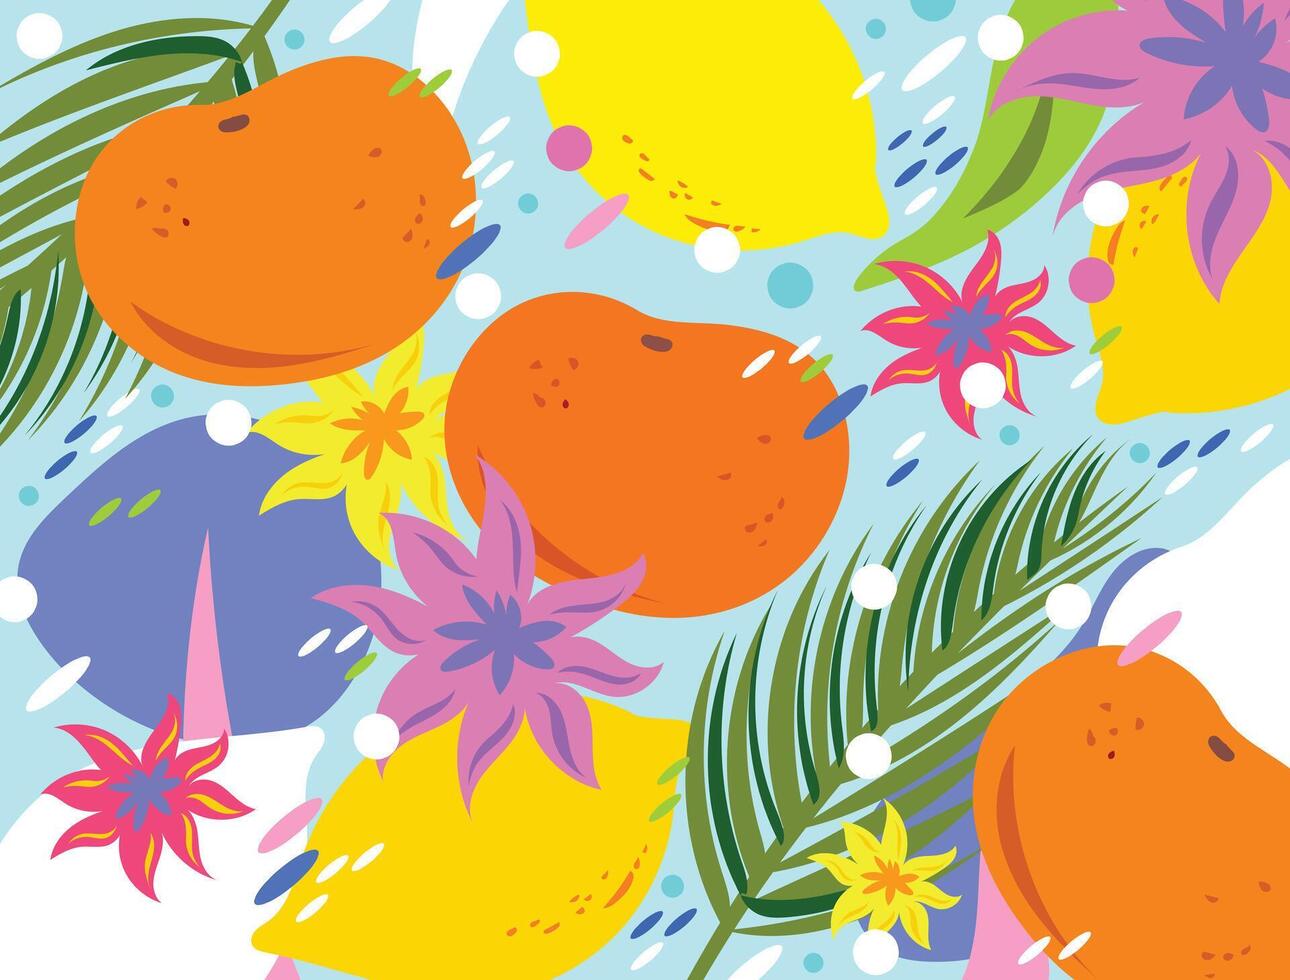 Summer fresh orange and lemon citrus botanical plants abstract vector illustration isolated on horizontal light blue background. Colorful social media post, poster, brochure, or card prints design.